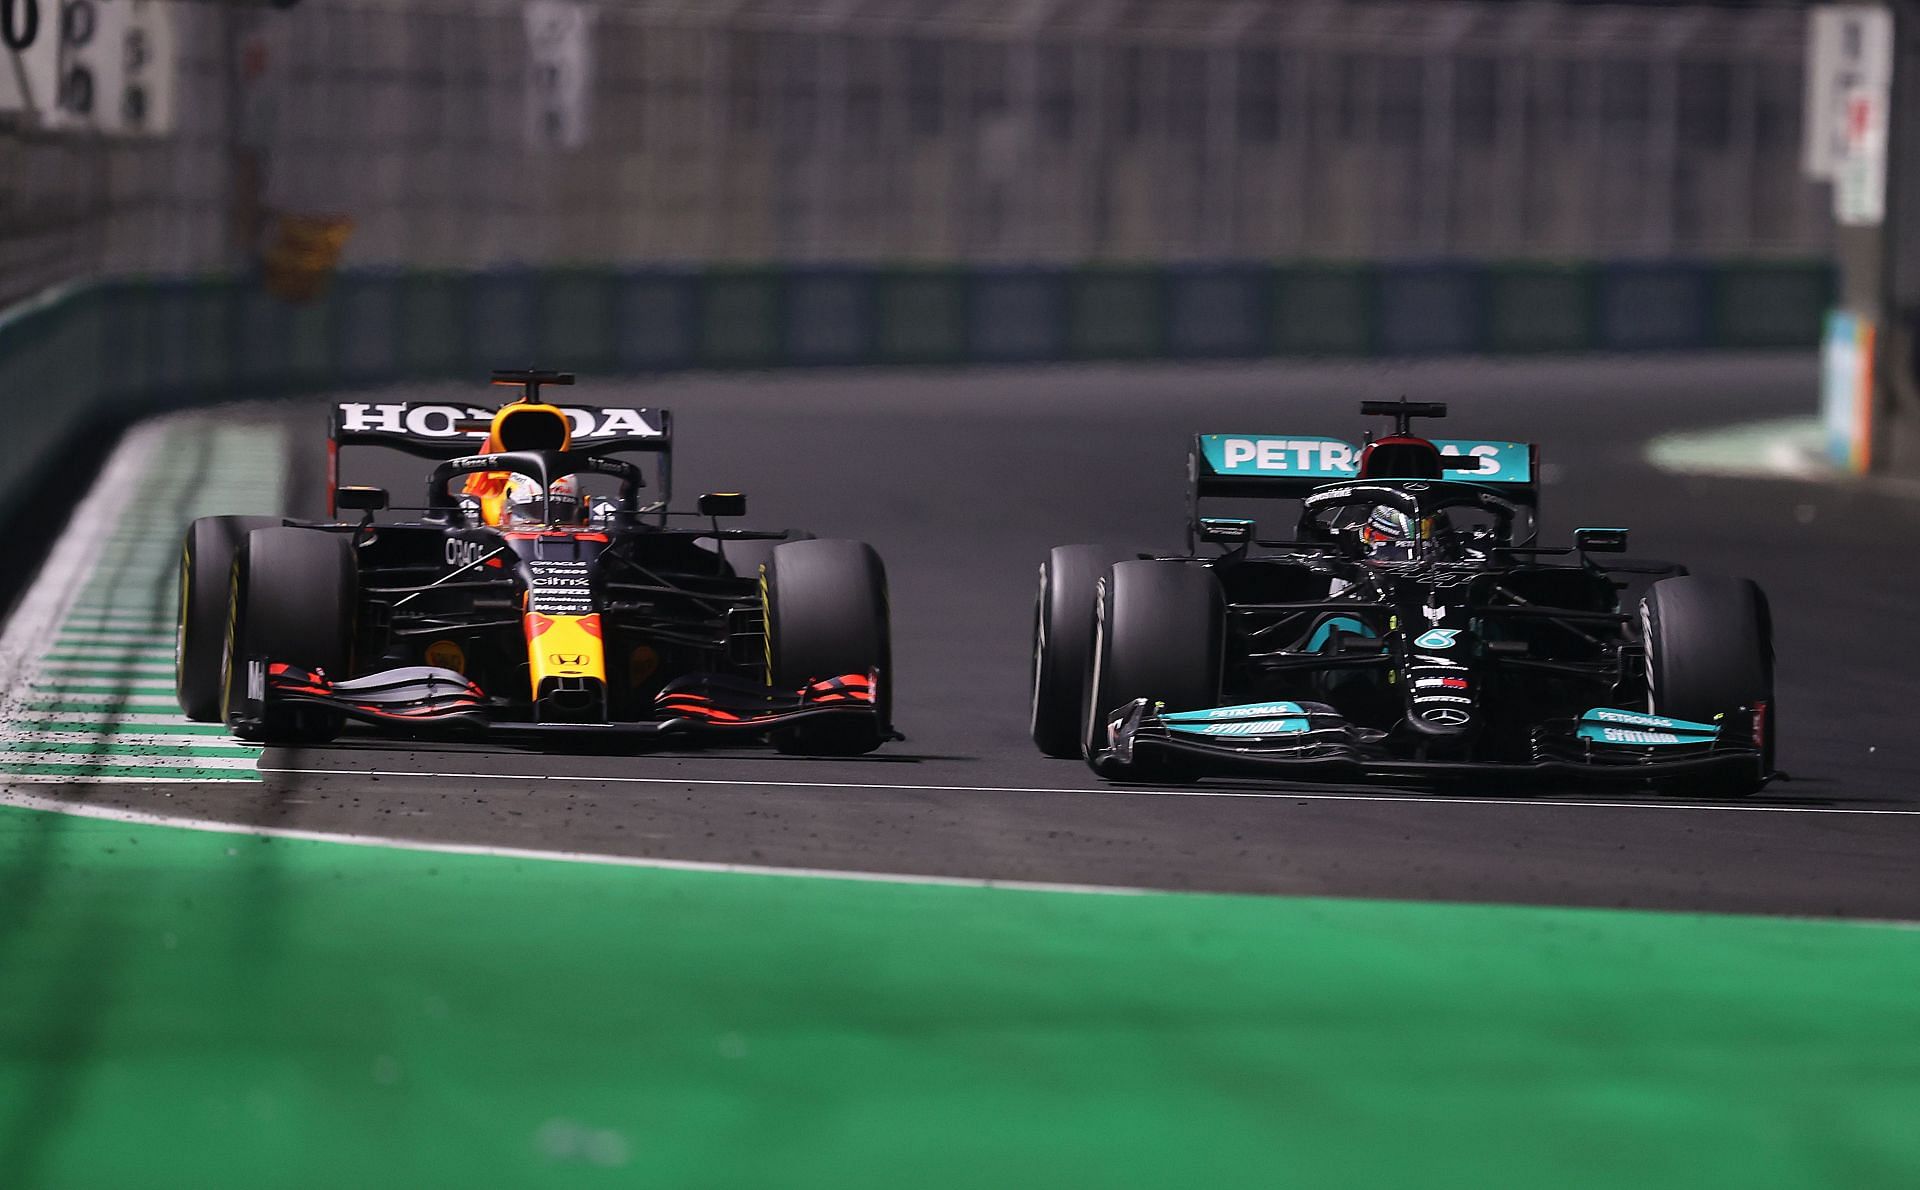 F1 Grand Prix of Saudi Arabia - Lewis Hamilton defends from Max Verstappen heading into a left-hander.